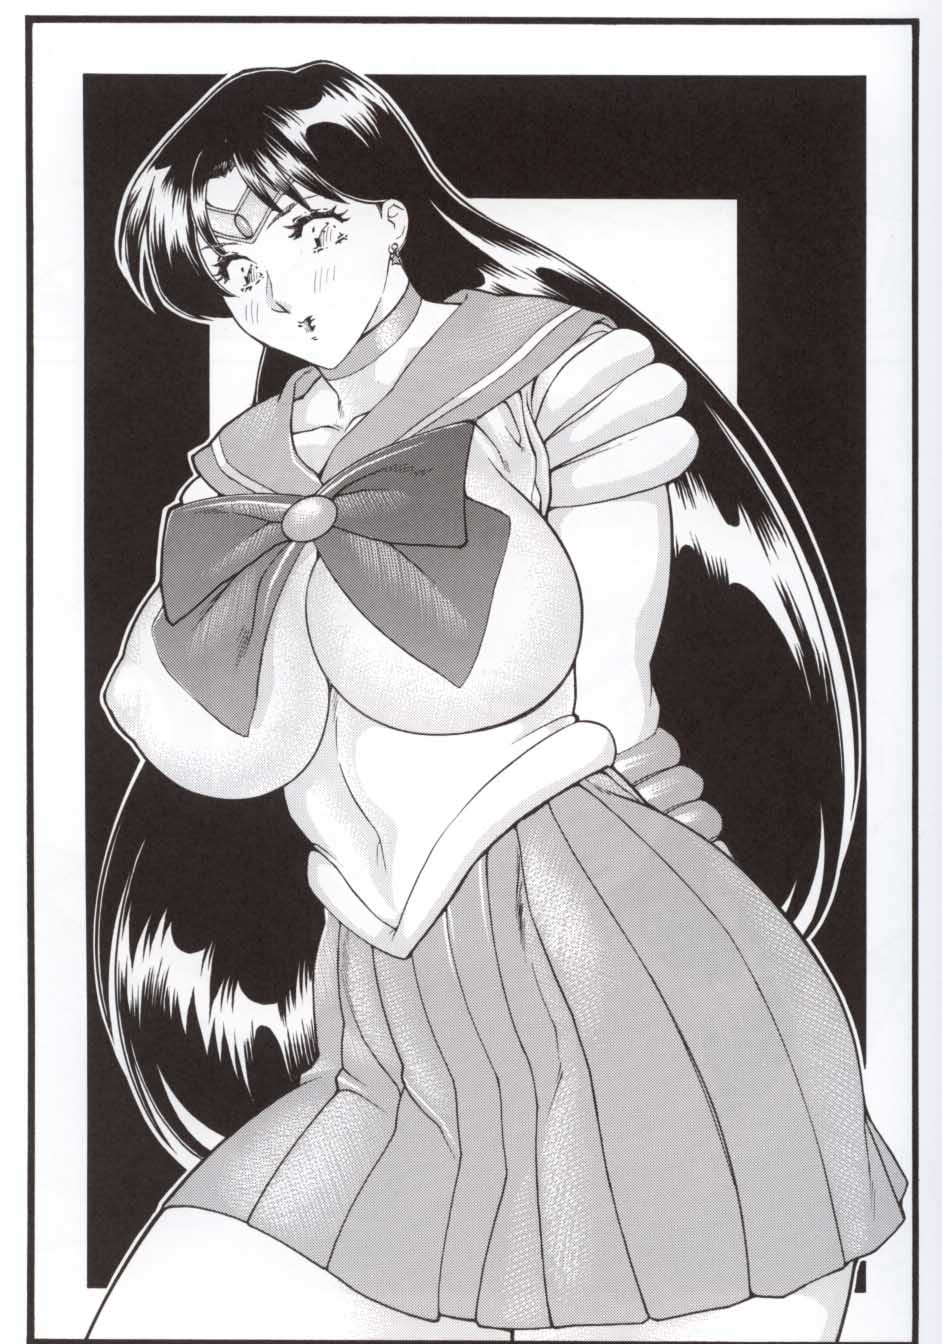 Next - Climax Magazine 12 [Sailor Moon] 